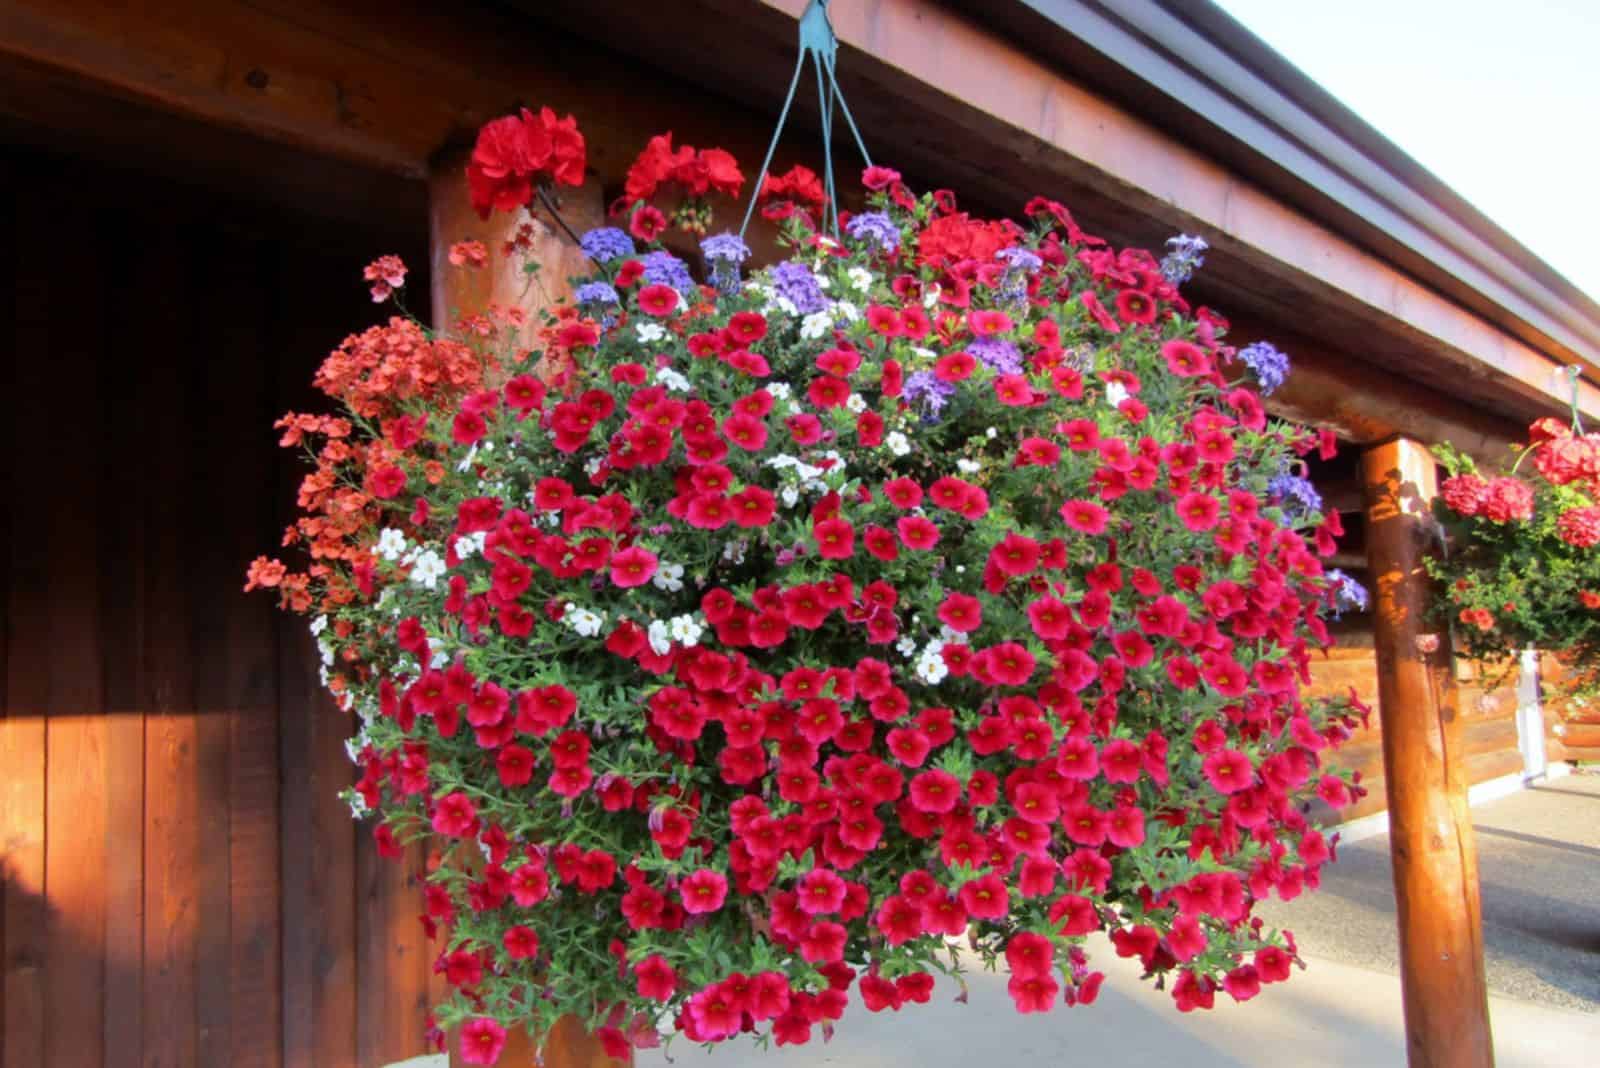 Hanging basket filled with vibrant red petunias, geraniums and lobelias